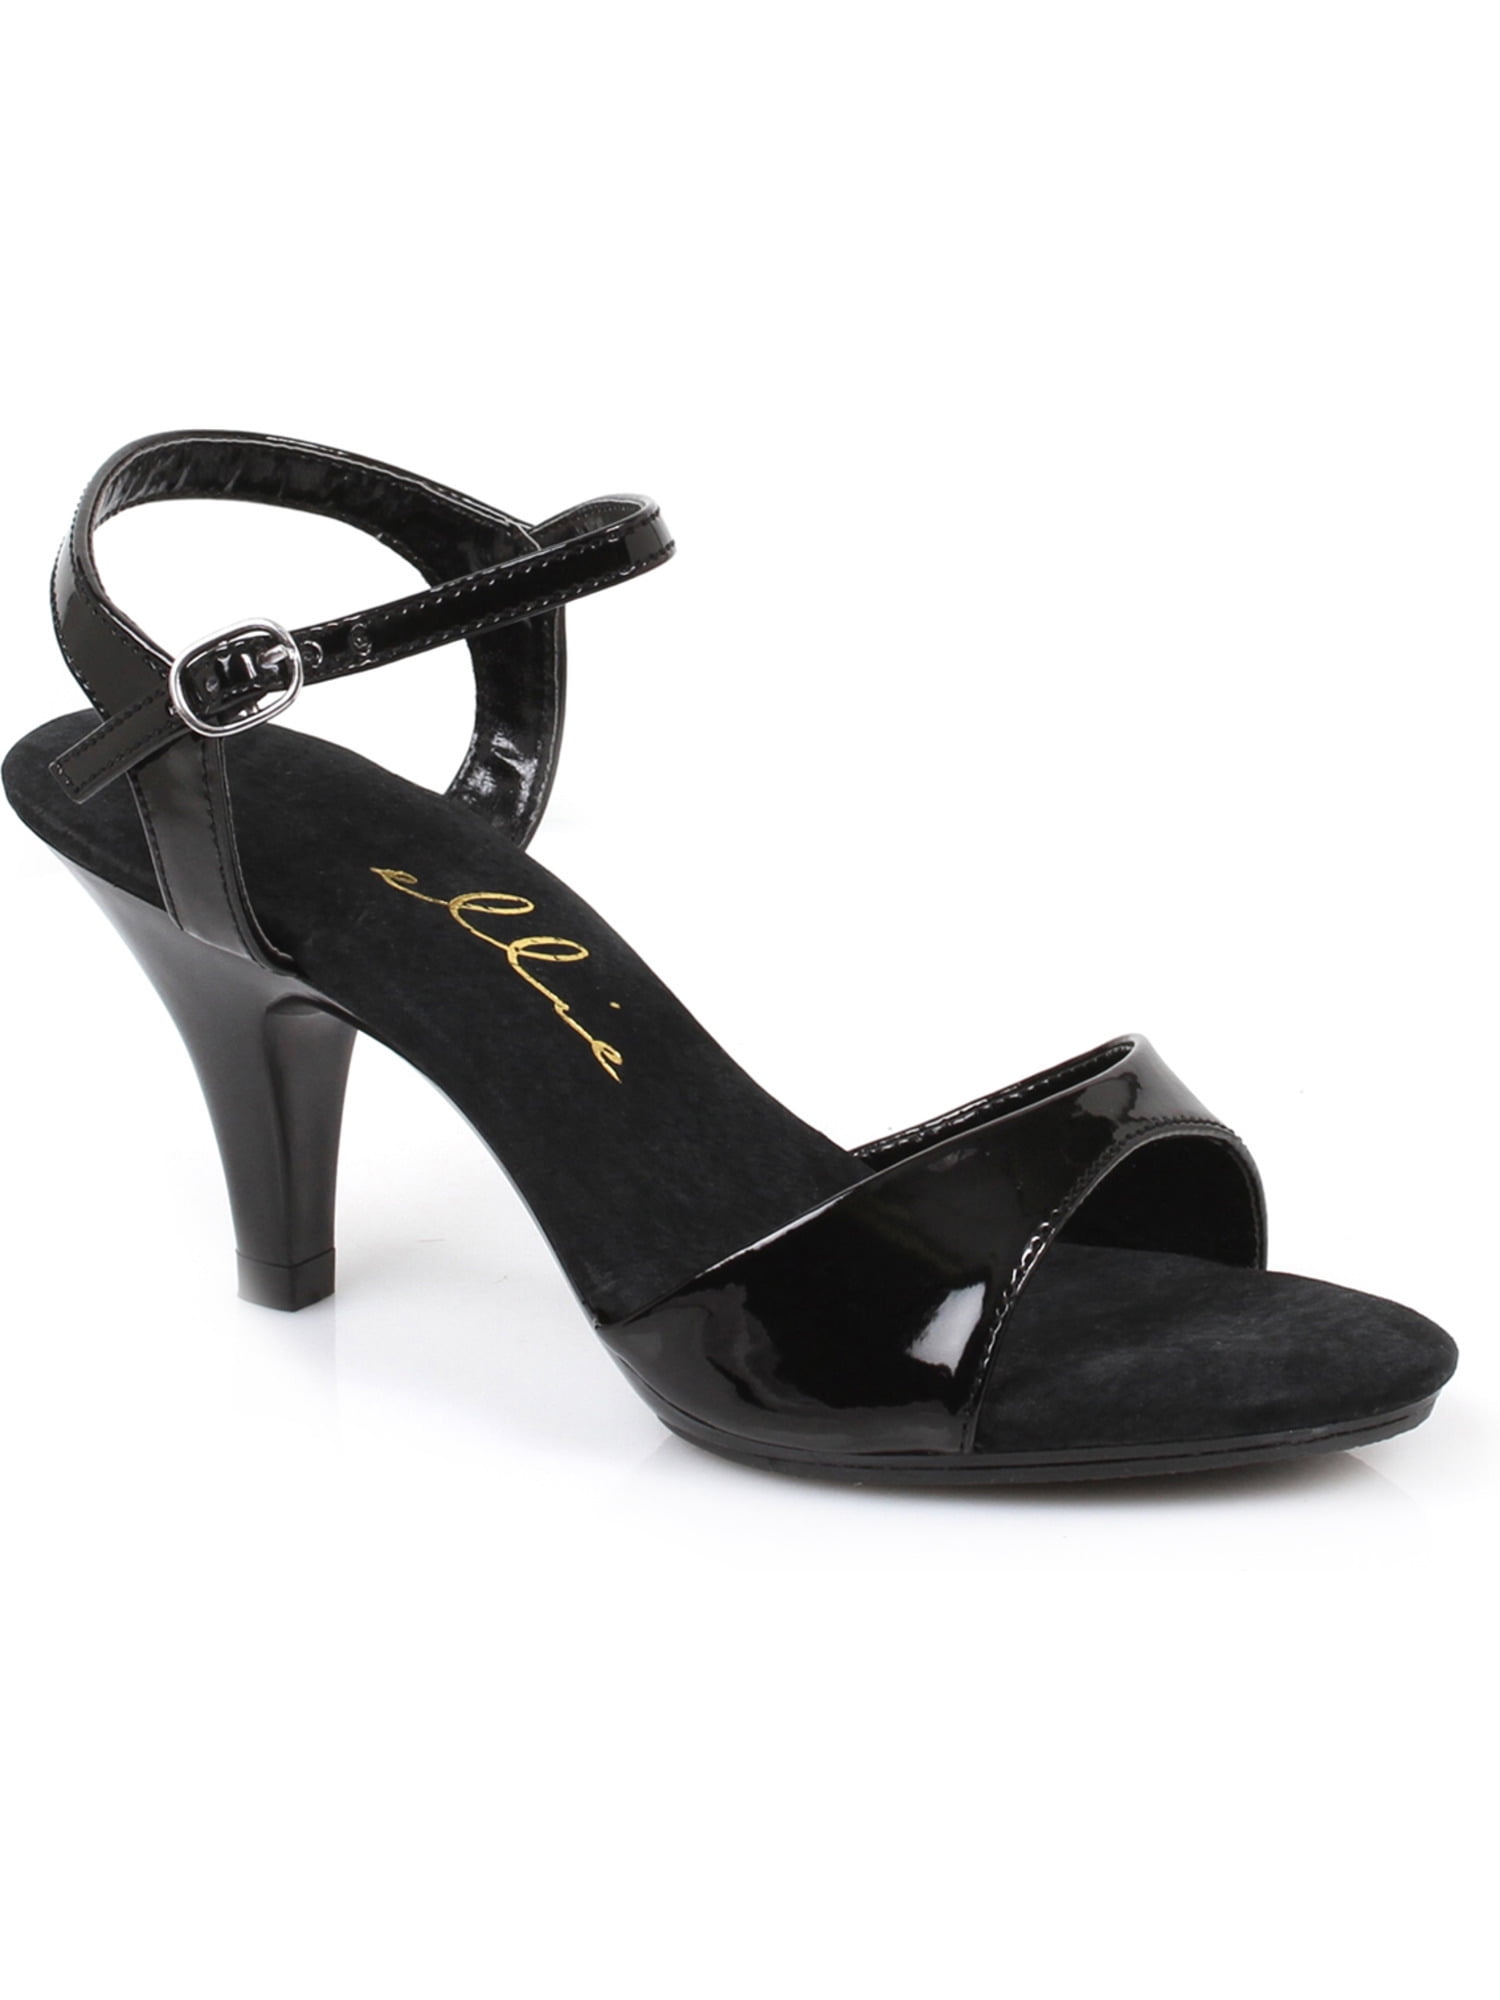 black ankle strap heels 3 inch